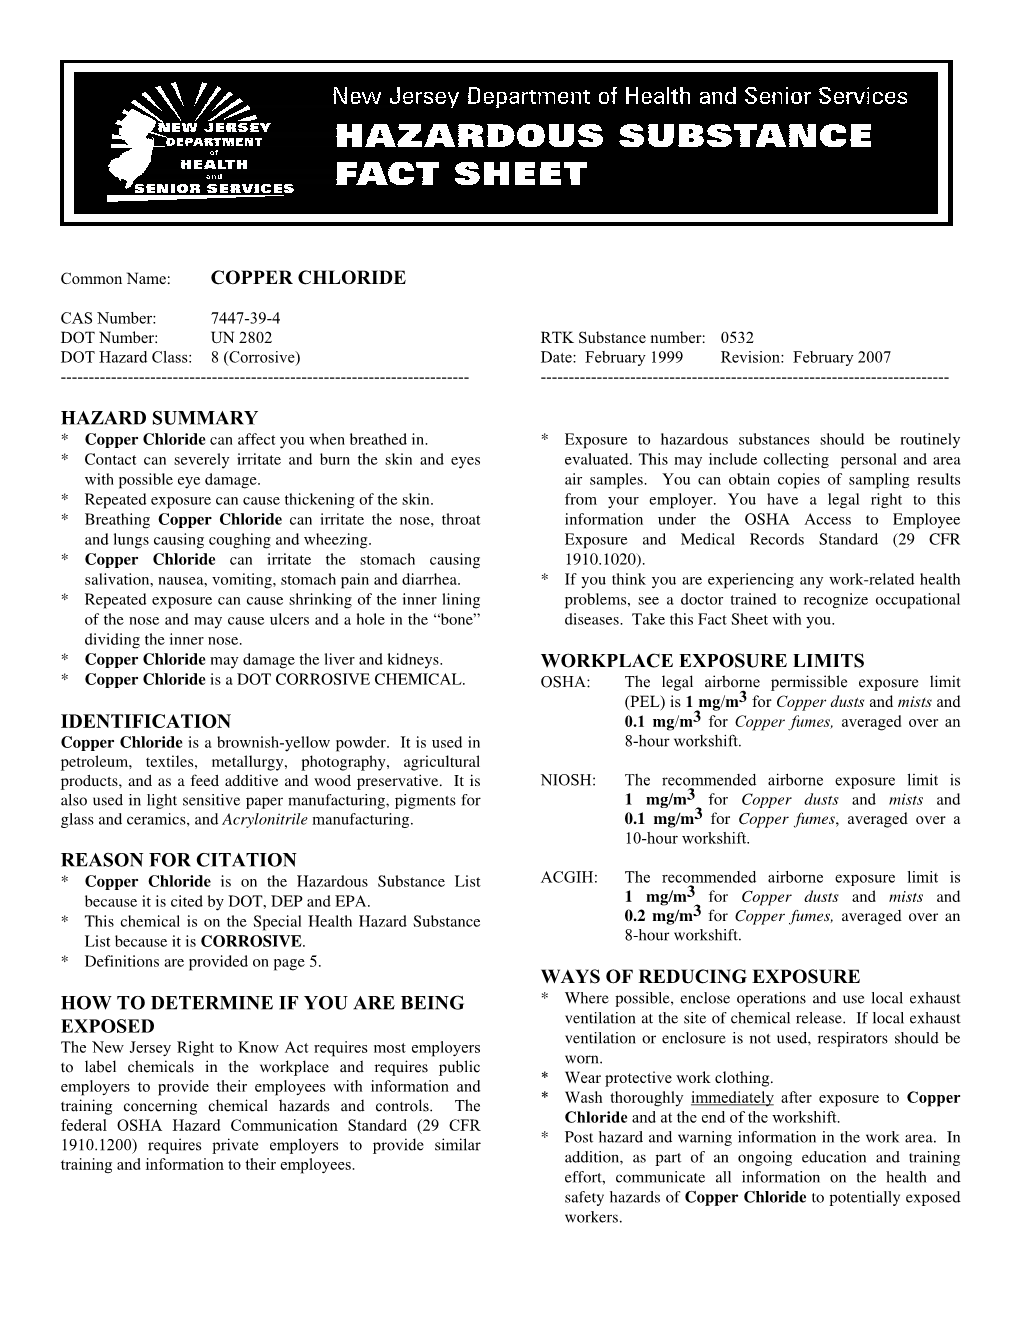 Copper Chloride Hazard Summary Identification